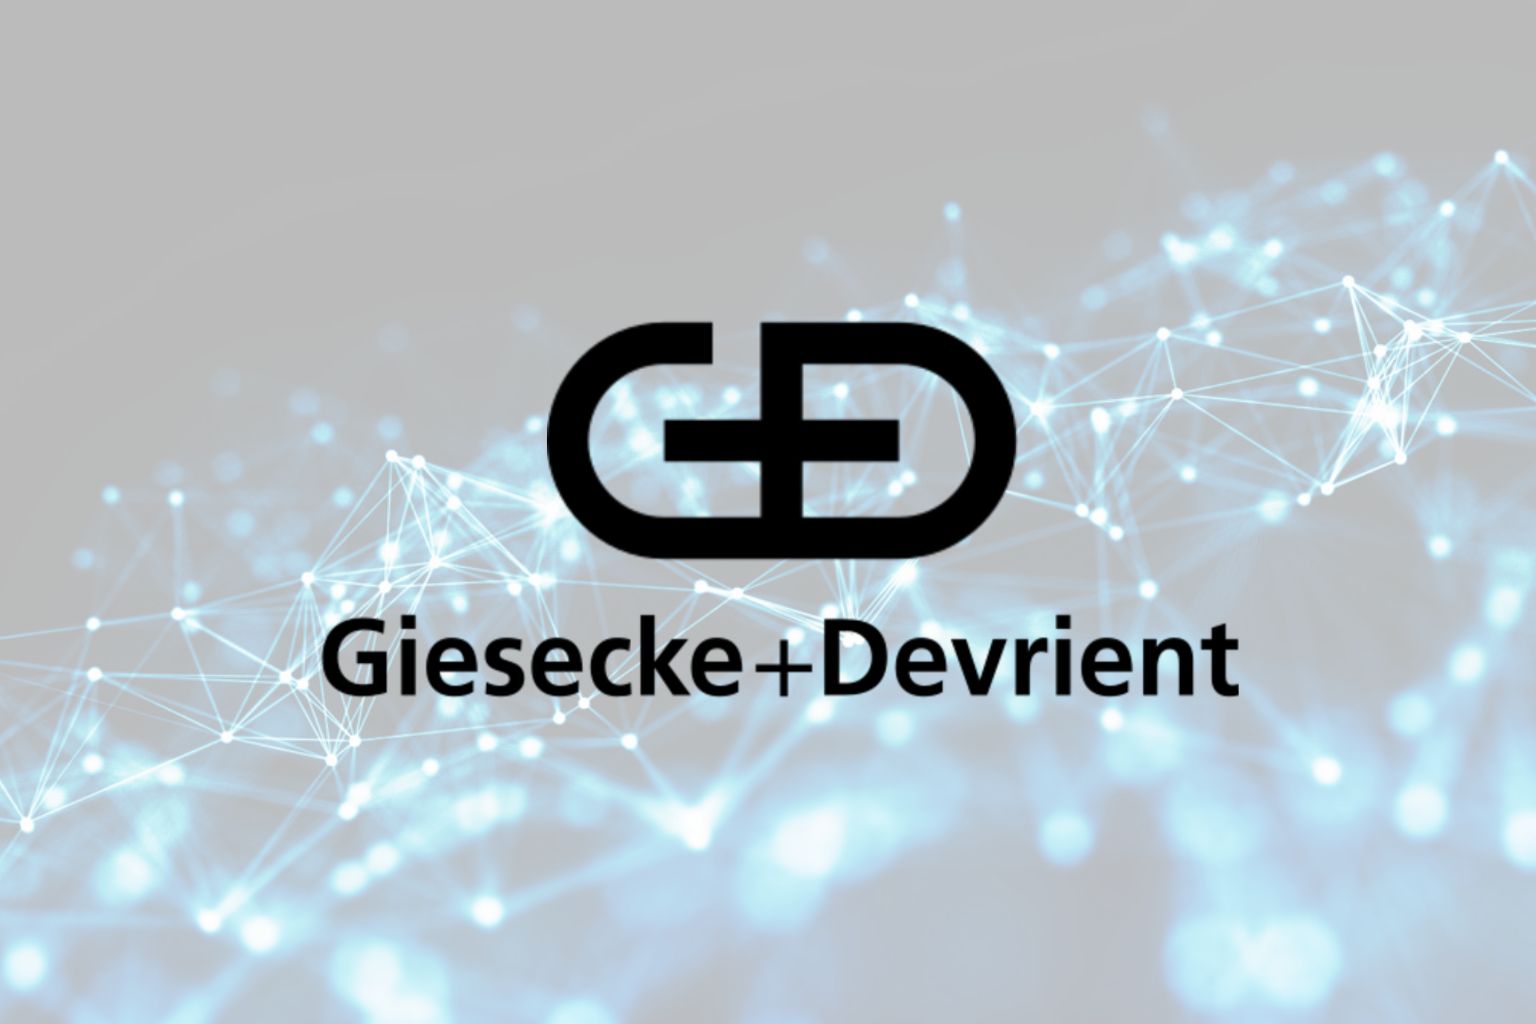 cch-tagetik-Giesecke+Devrient-thumbnail-customer-video.jpg